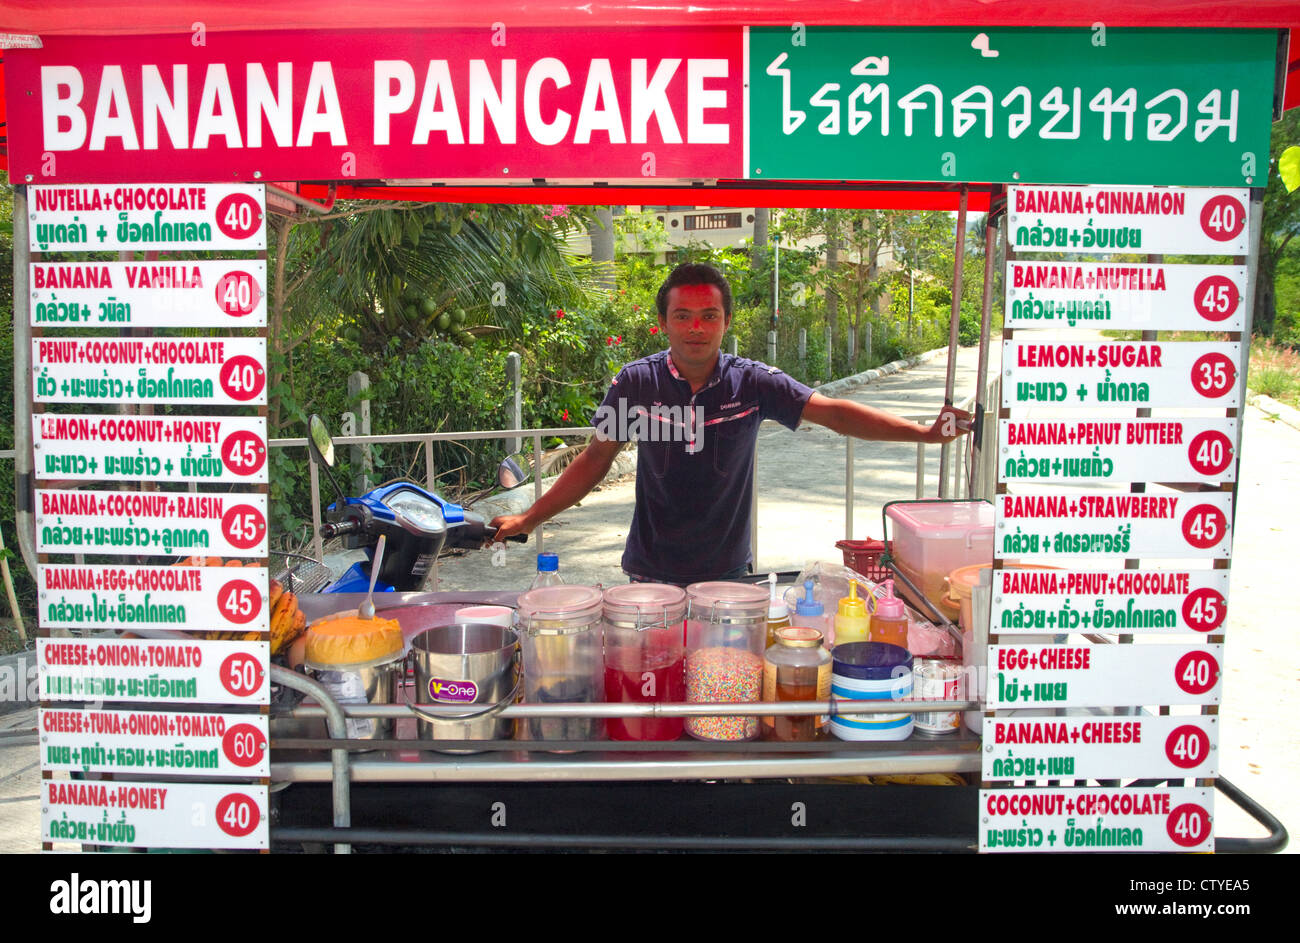 Banana pancake street food vendor on the island of Ko Samui, Thailand. Stock Photo